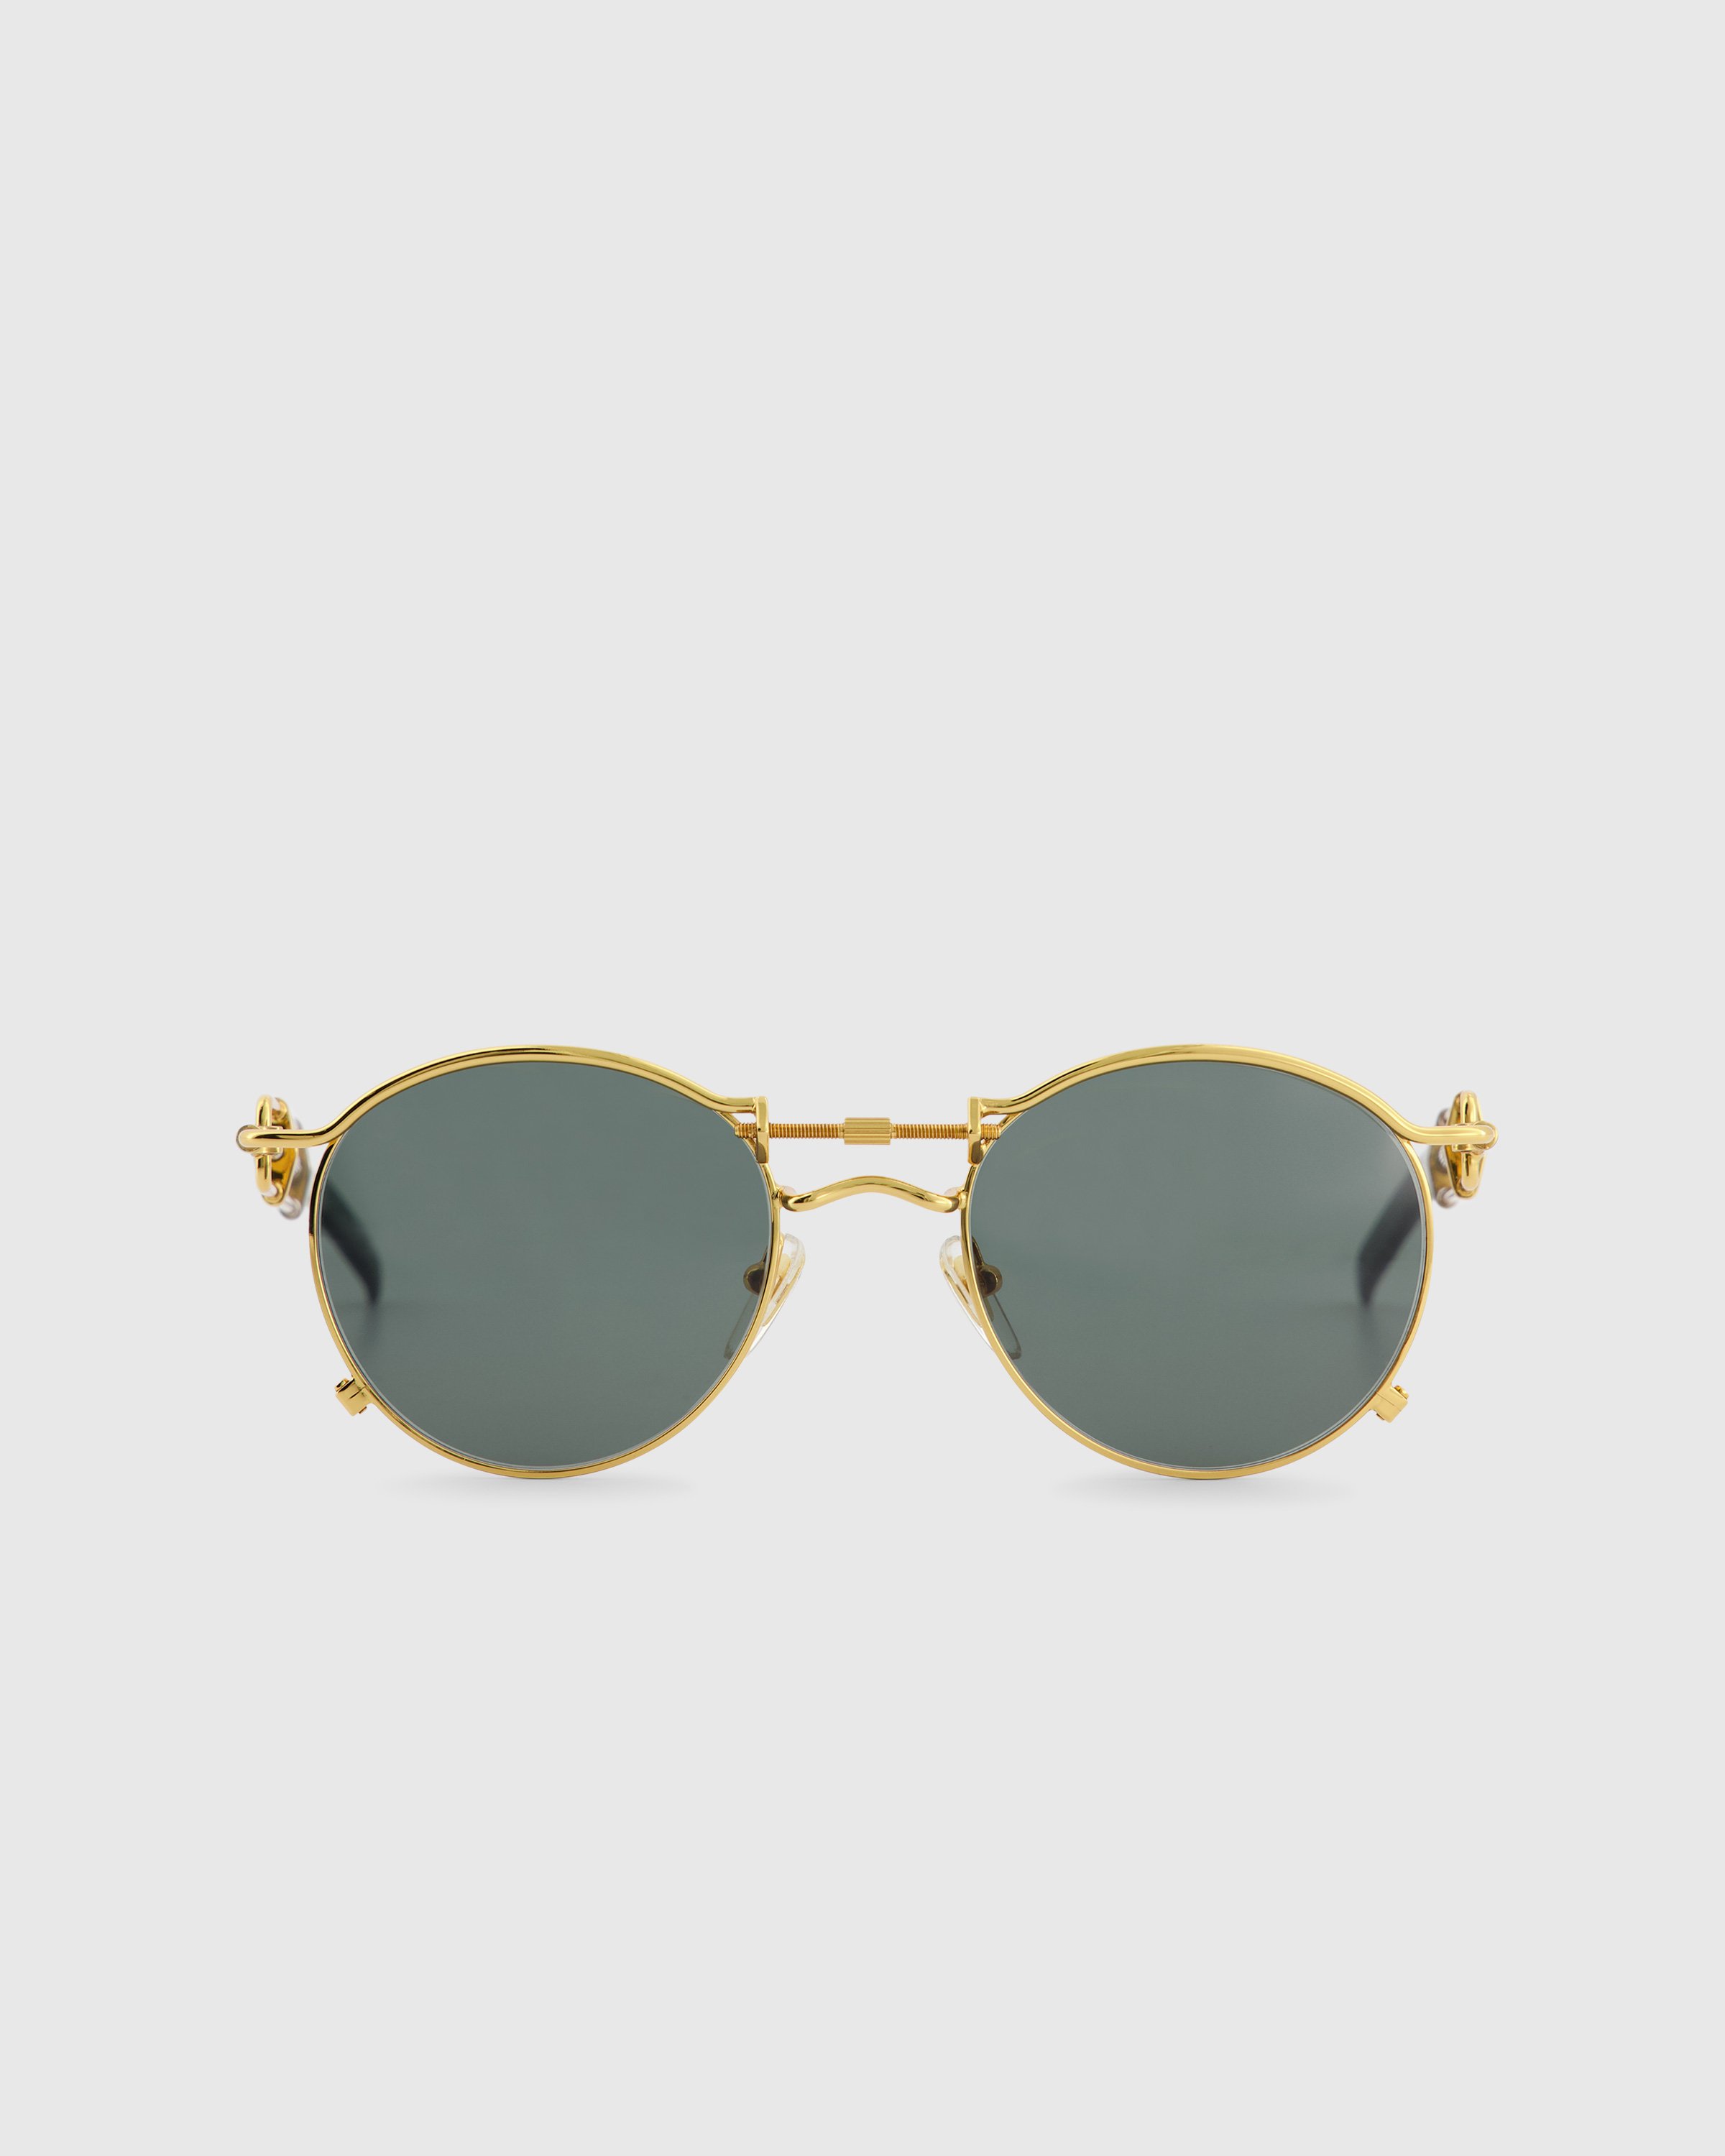 Jean Paul Gaultier x Burna Boy - 56-0174 Pas De Vis Sunglasses Yellow - Accessories - Yellow - Image 1